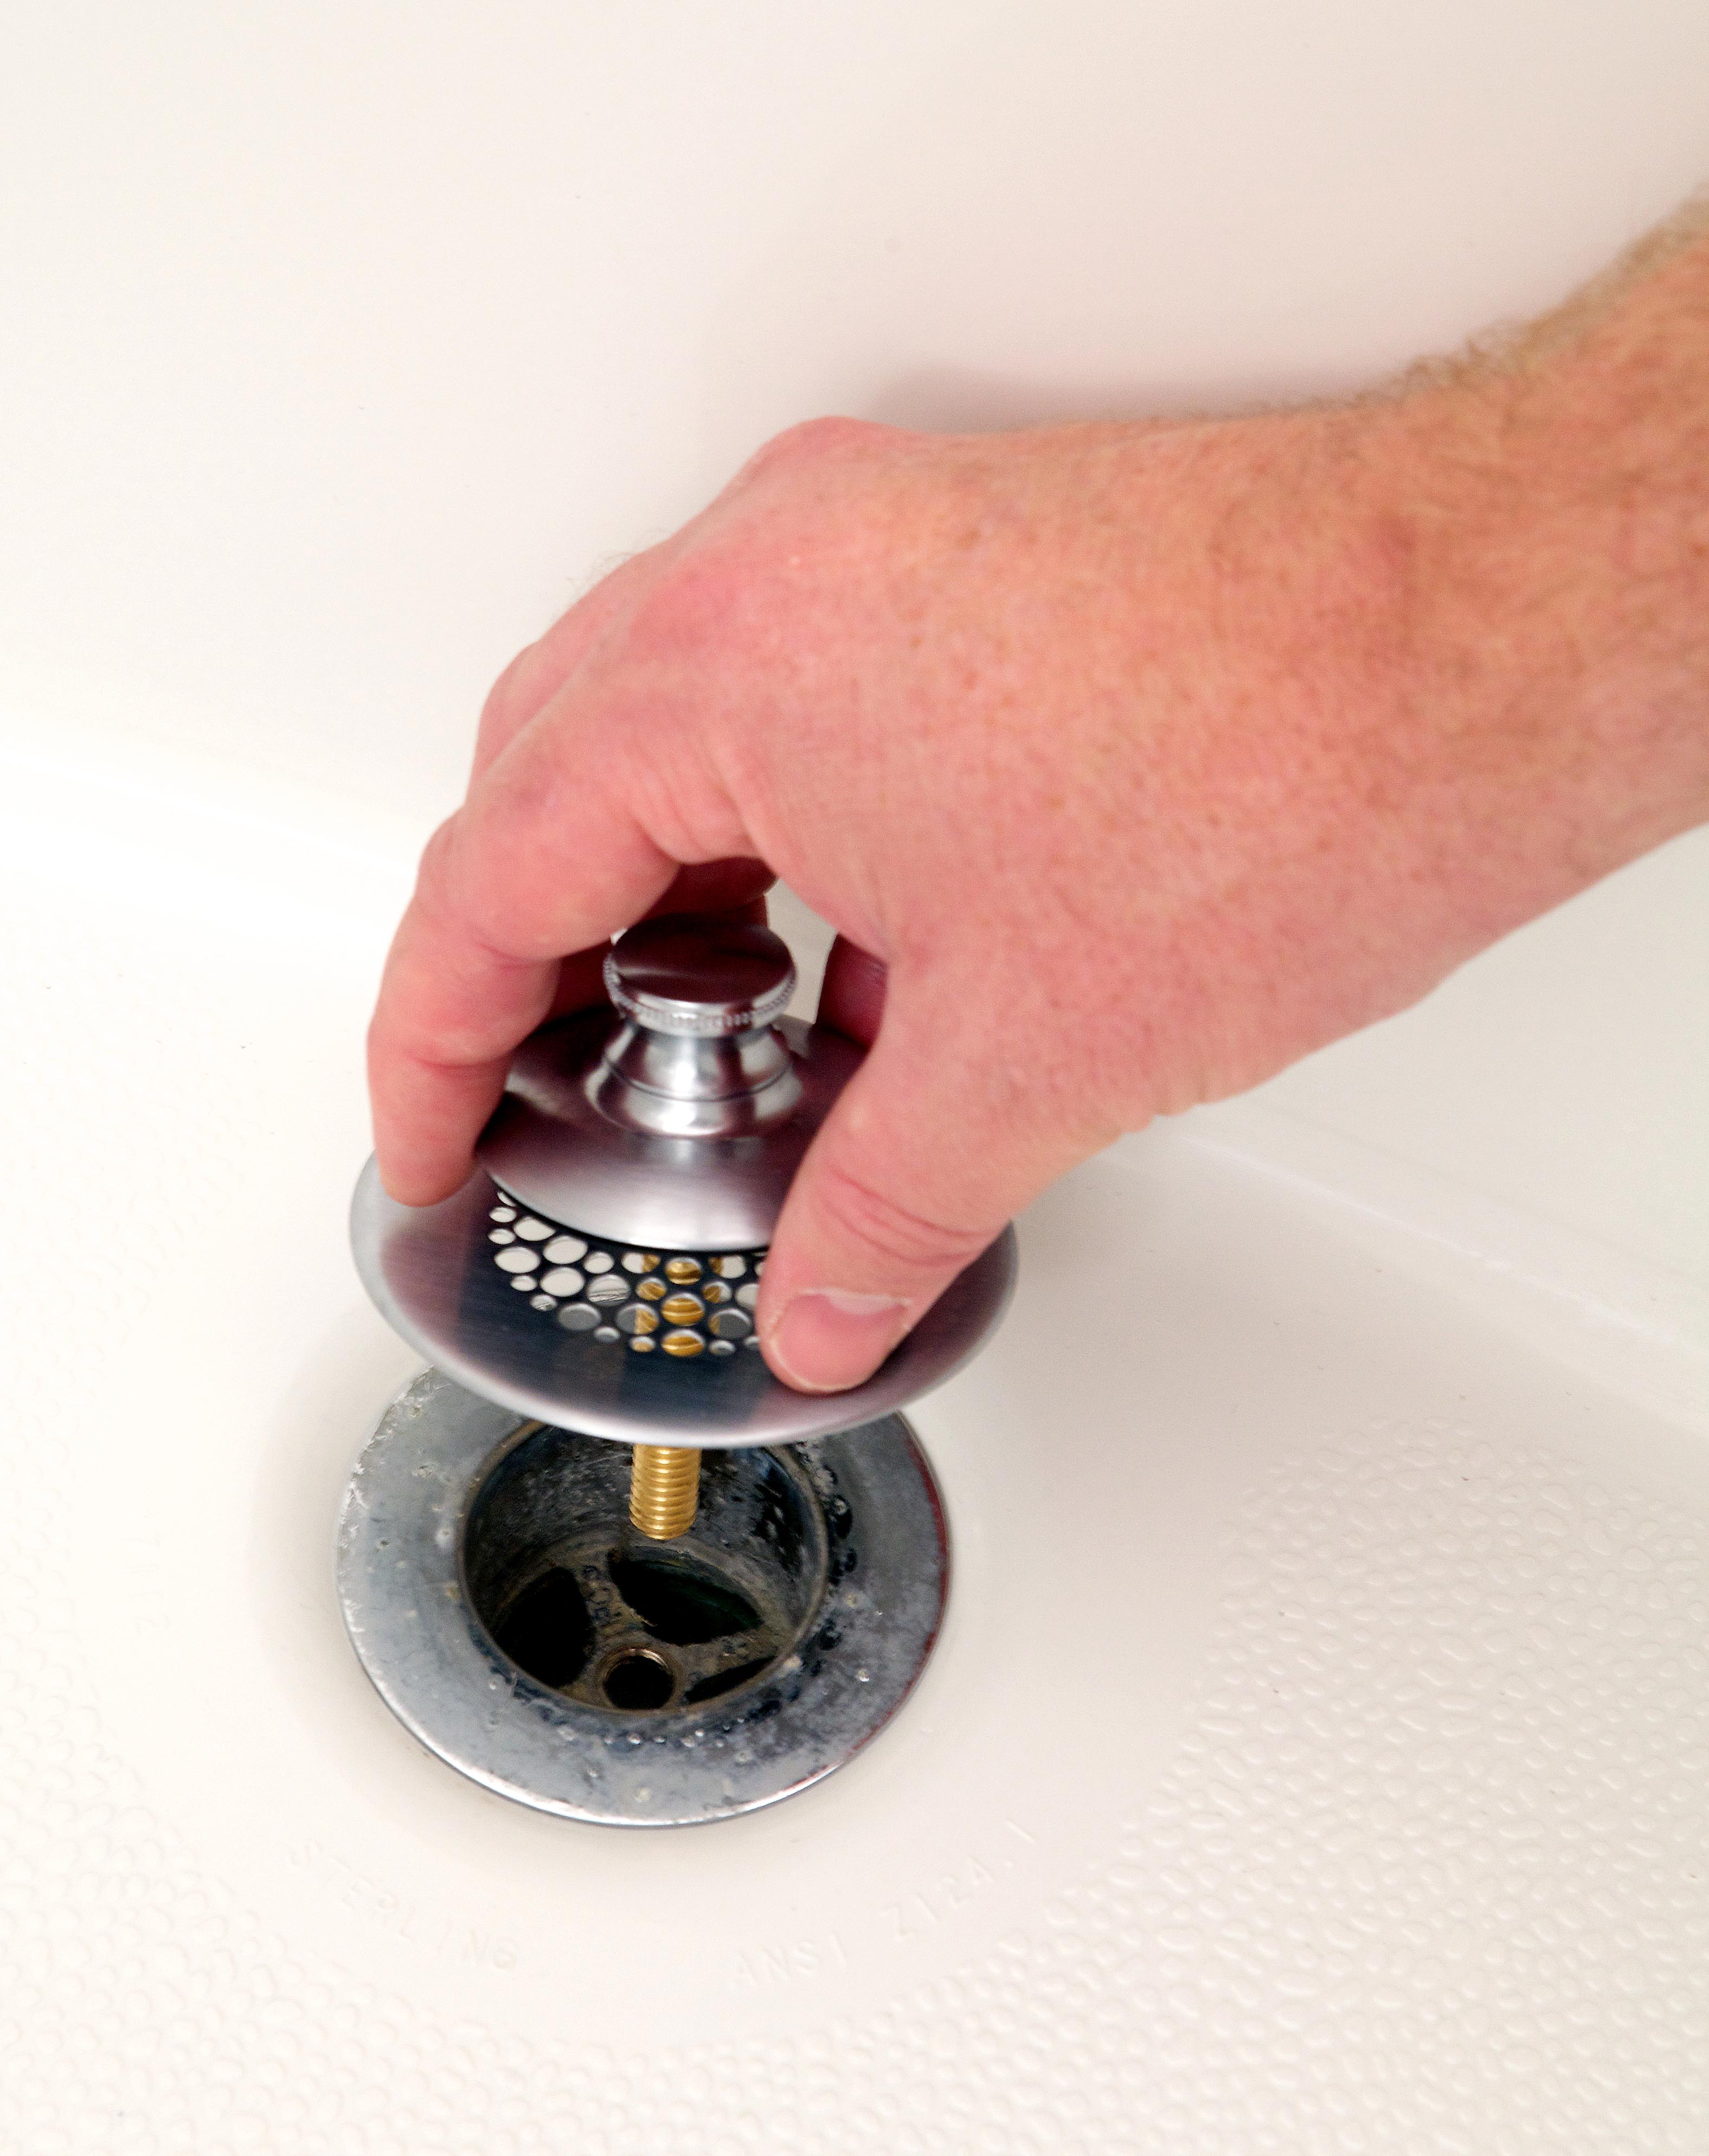 Watco Universal NuFit bathtub drain cover wins Contractor